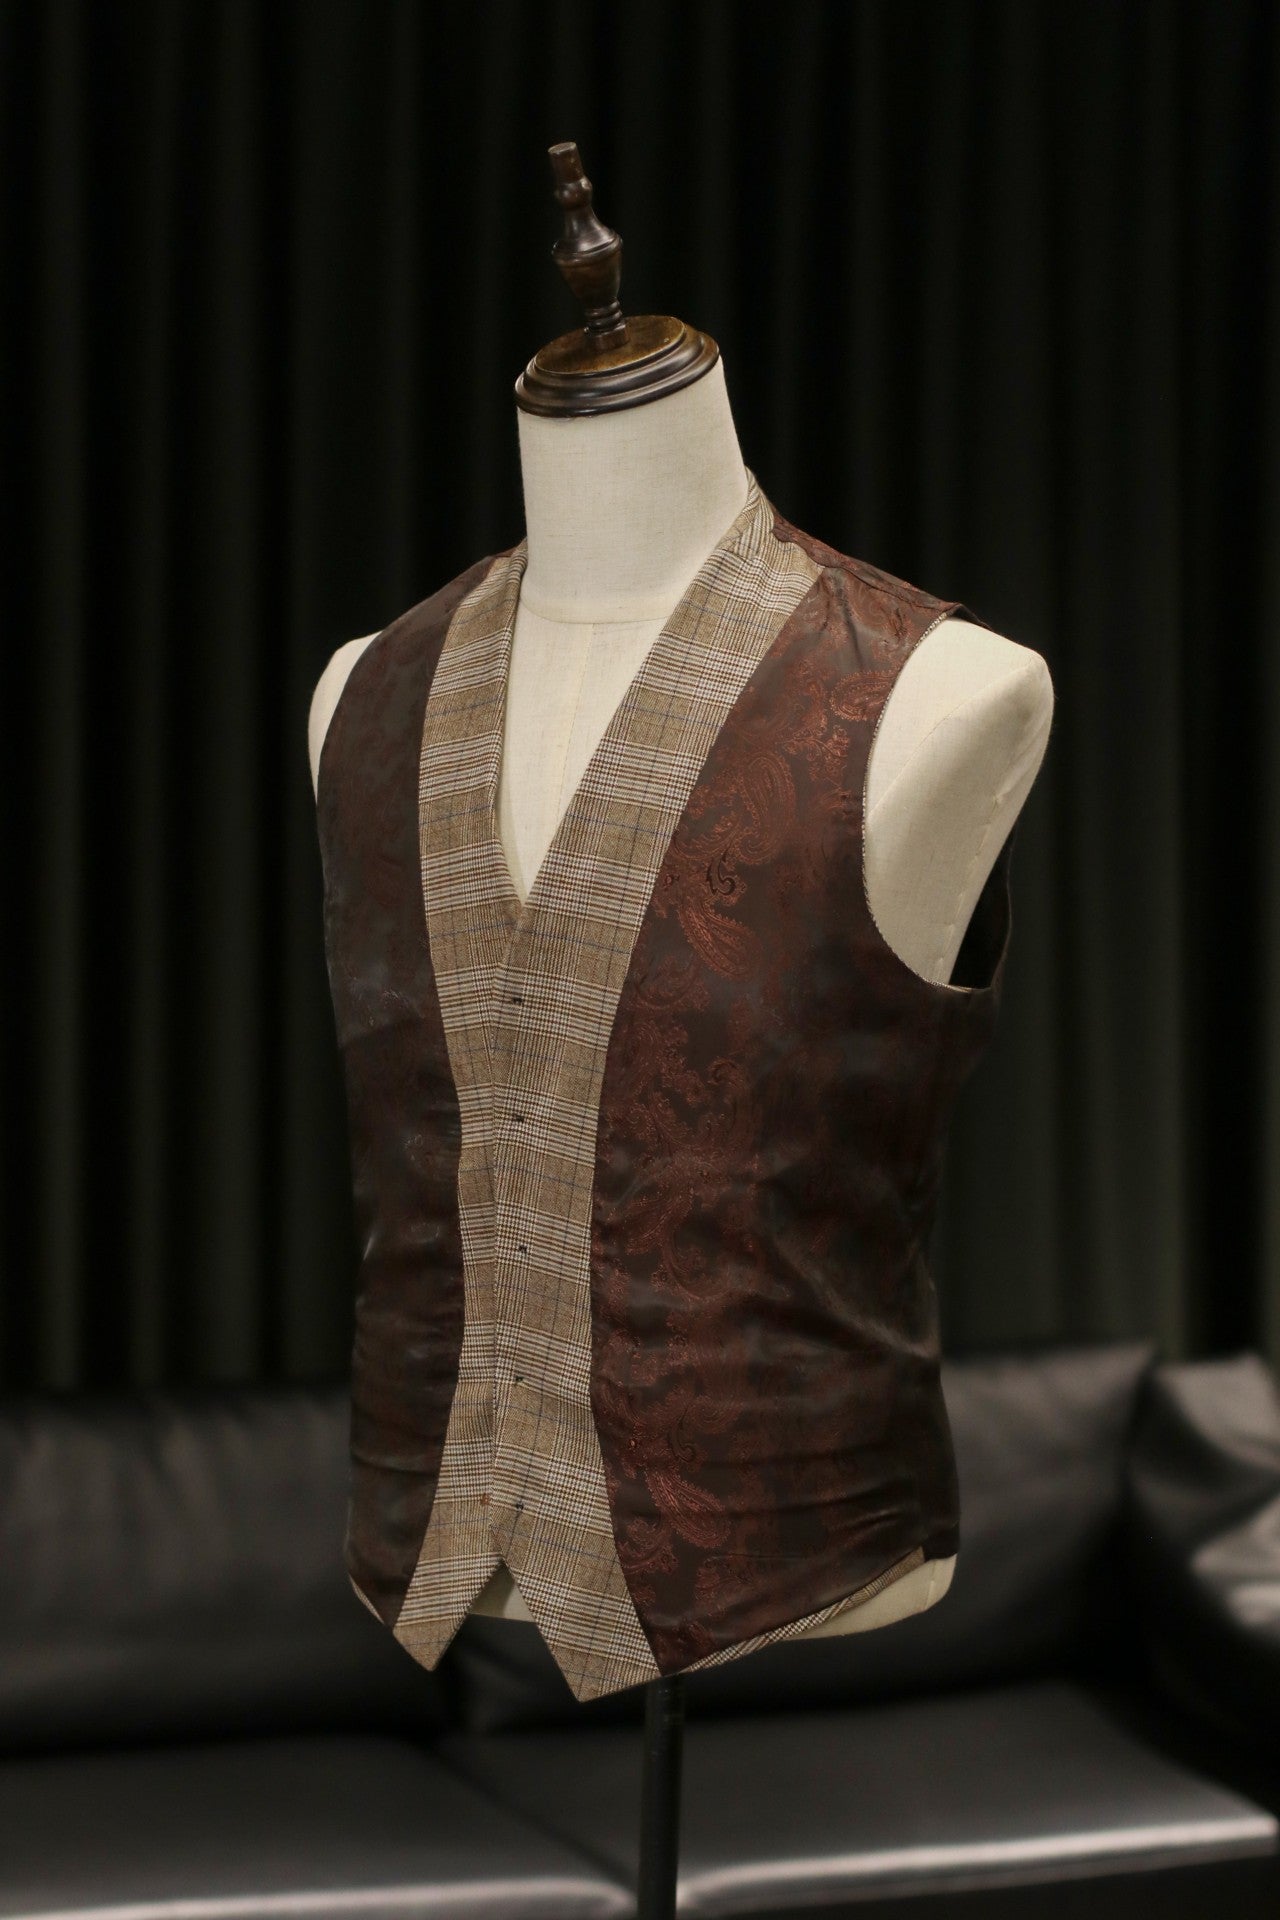 TAVERNY Captain - Men's Three-Piece Checkered Suit in Beige